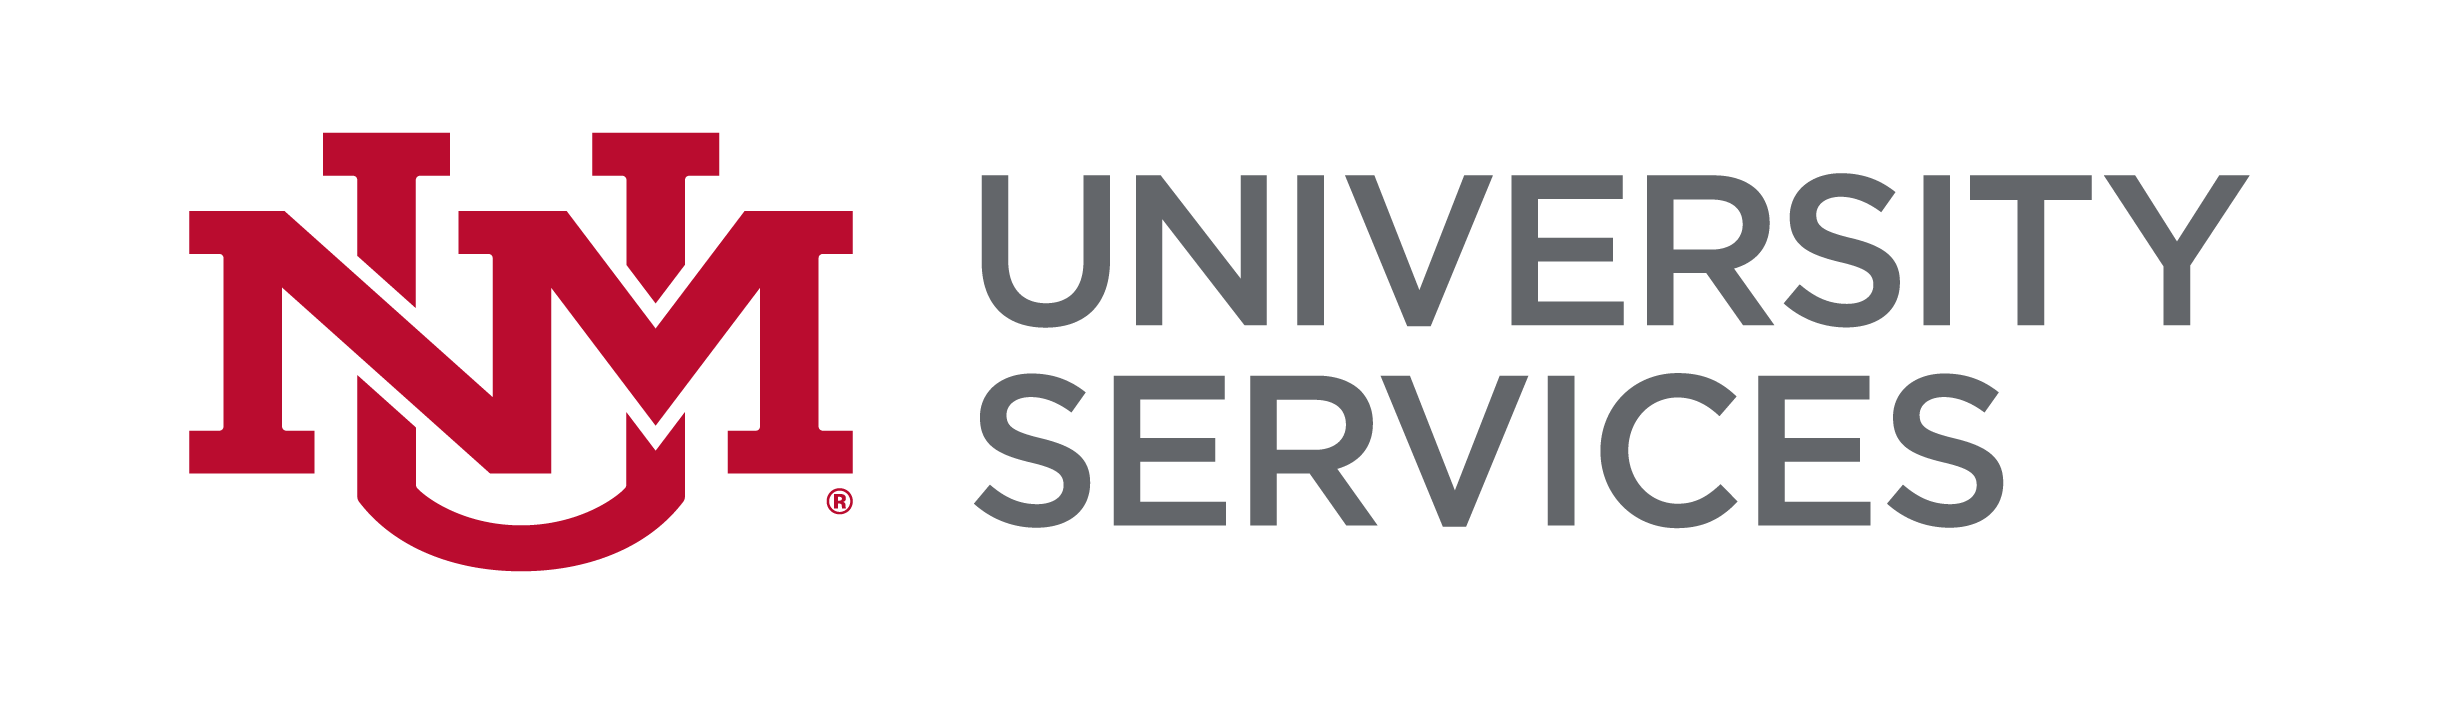 University Services